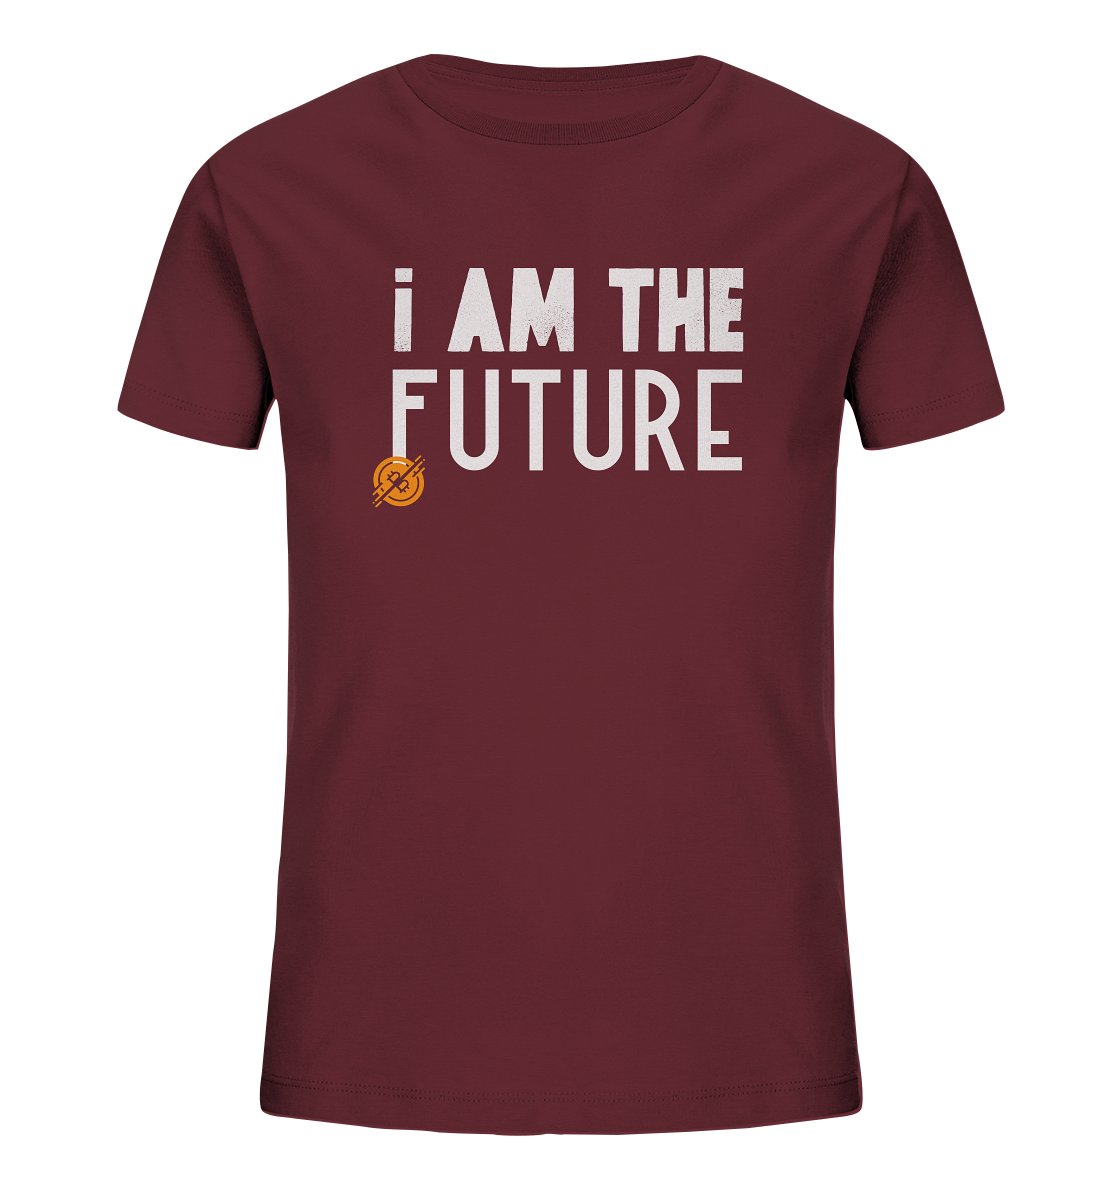 Bitcoin Kids T-Shirt "I am the future" - Kids Organic Shirt